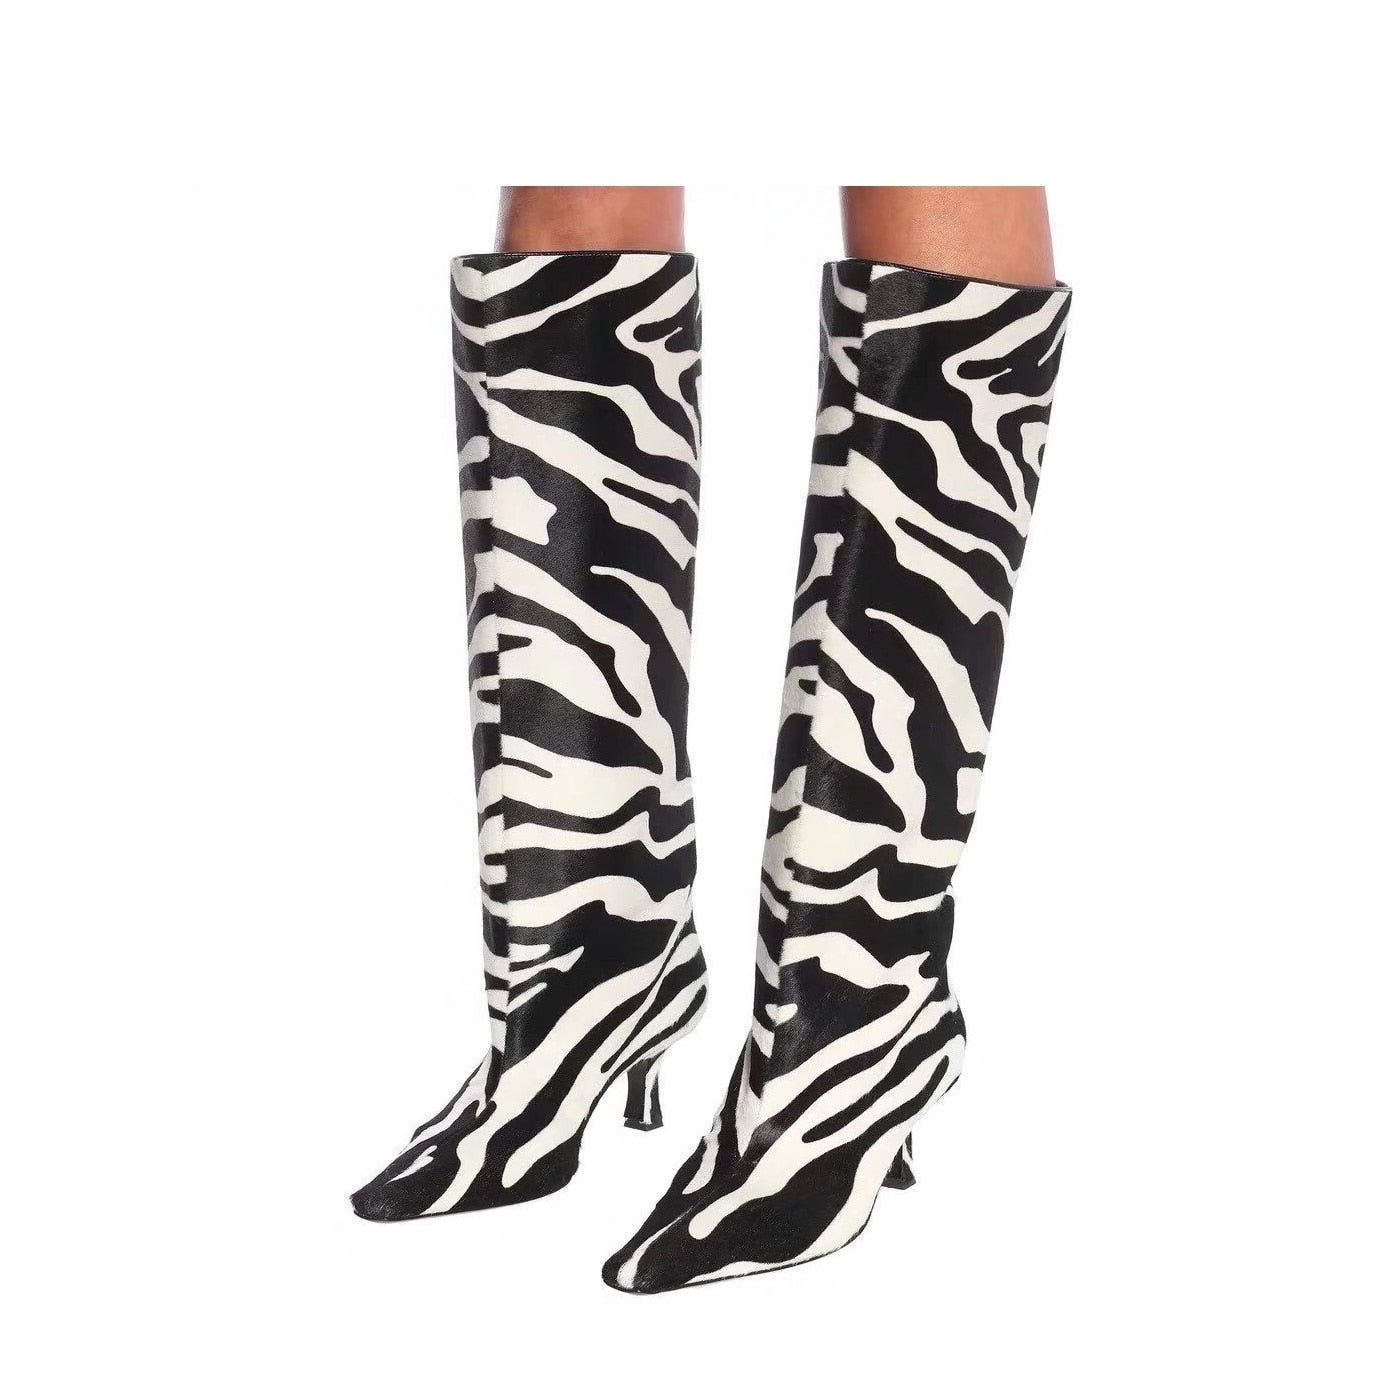 Zebra Stripe Isabel Marant Inspired Boots- Sansa Costa